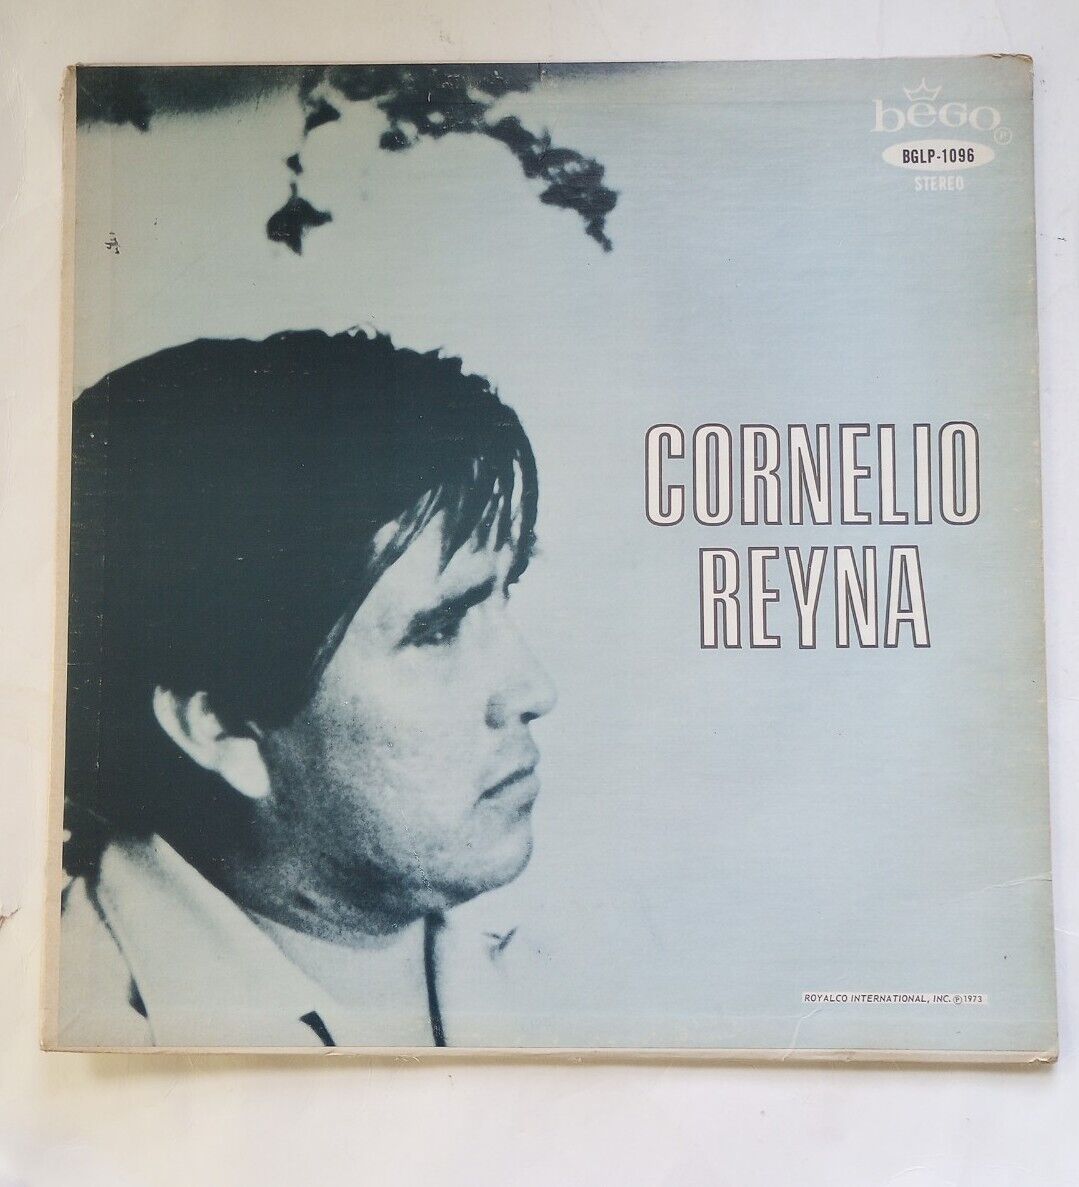 Cornelio Reyna  bego bglp 1096Vinyl LP Album Rare